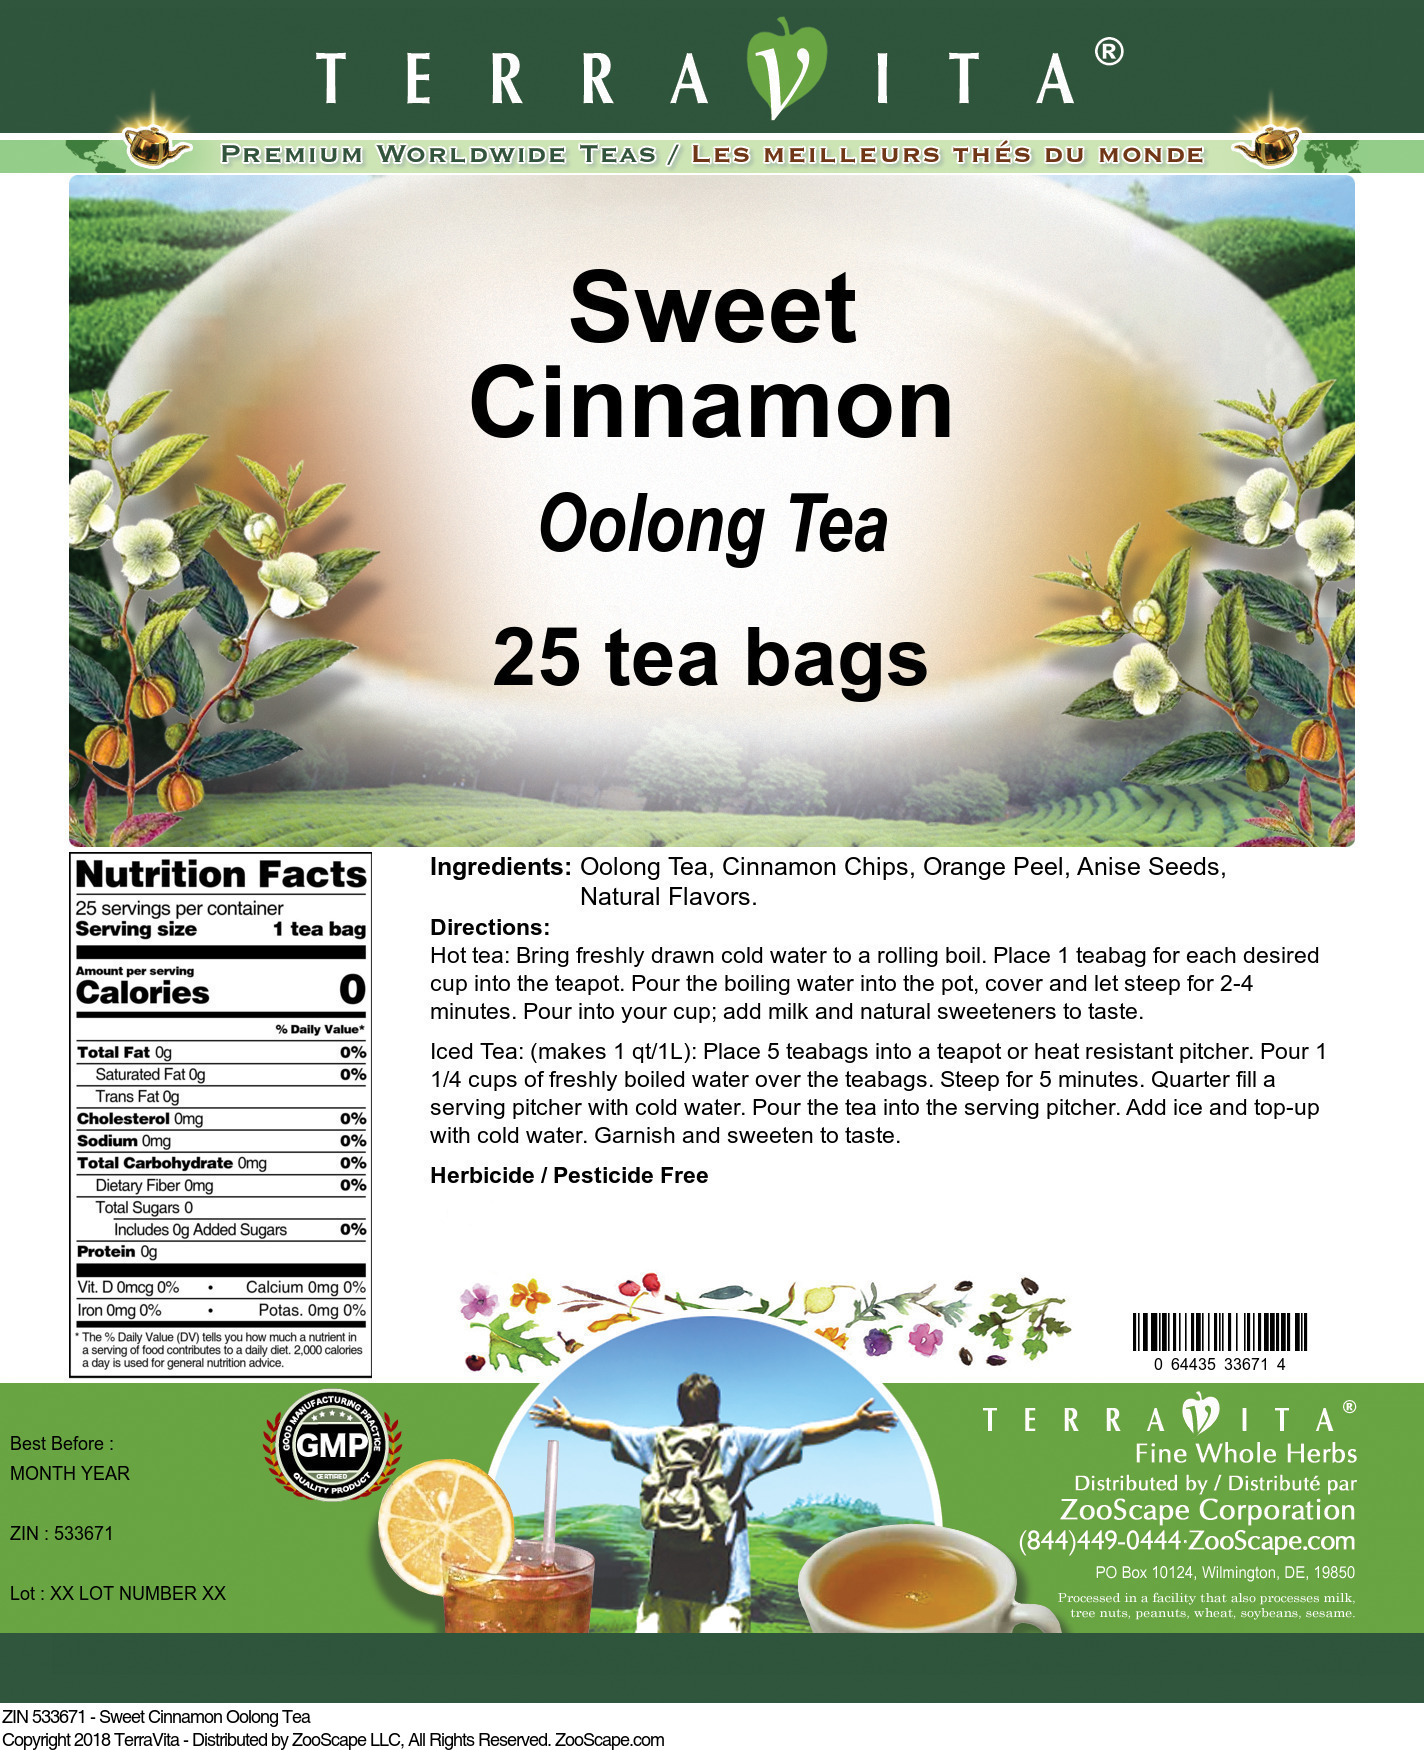 Sweet Cinnamon Oolong Tea - Label